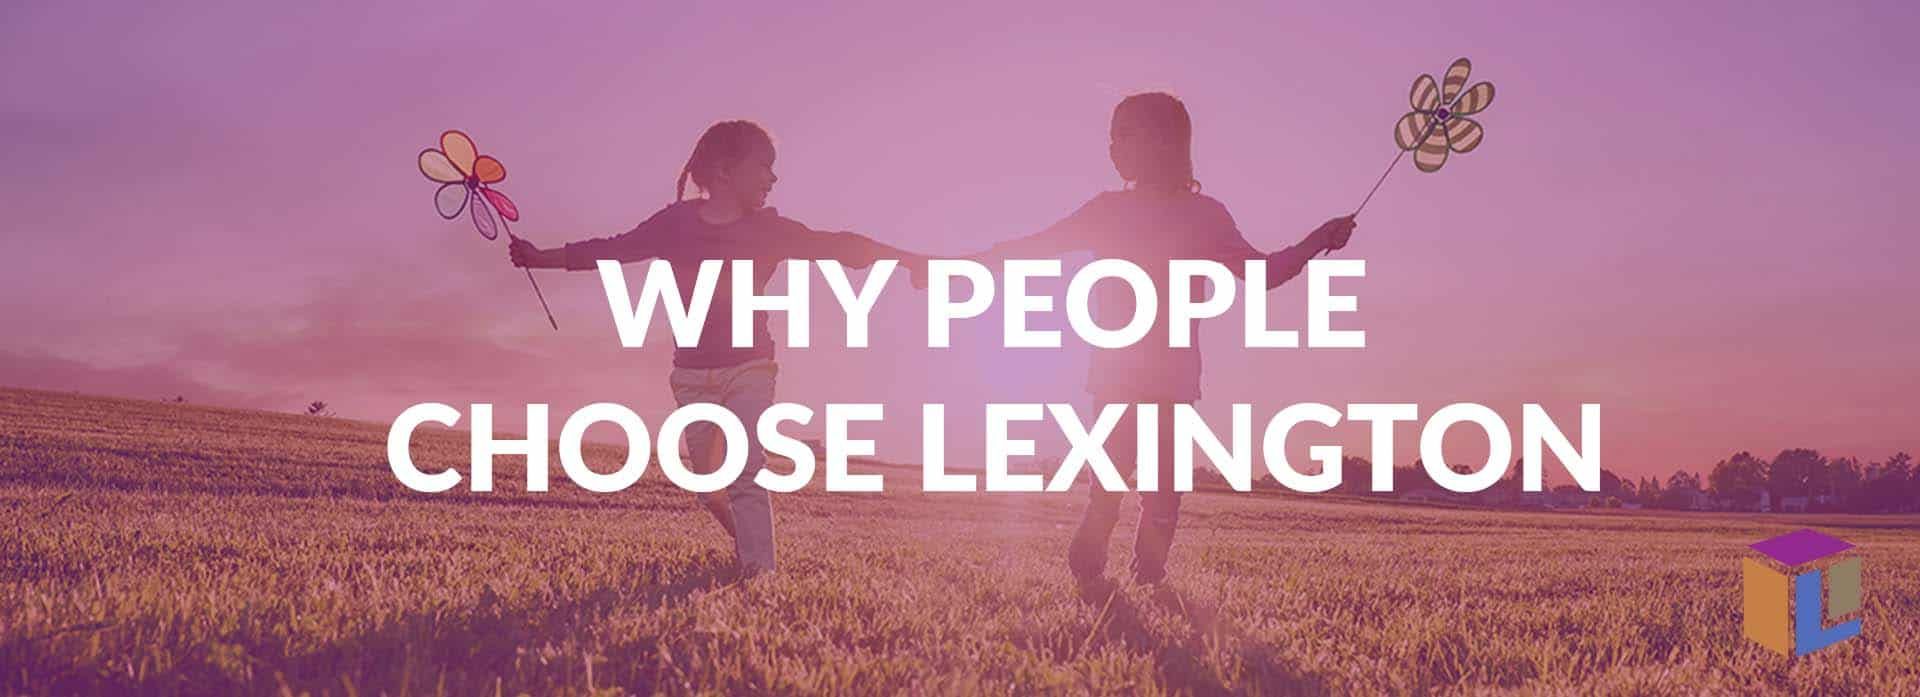 Why People Choose Lexington Why People Choose Lexington Why People Choose Lexington Why People Choose Lexington